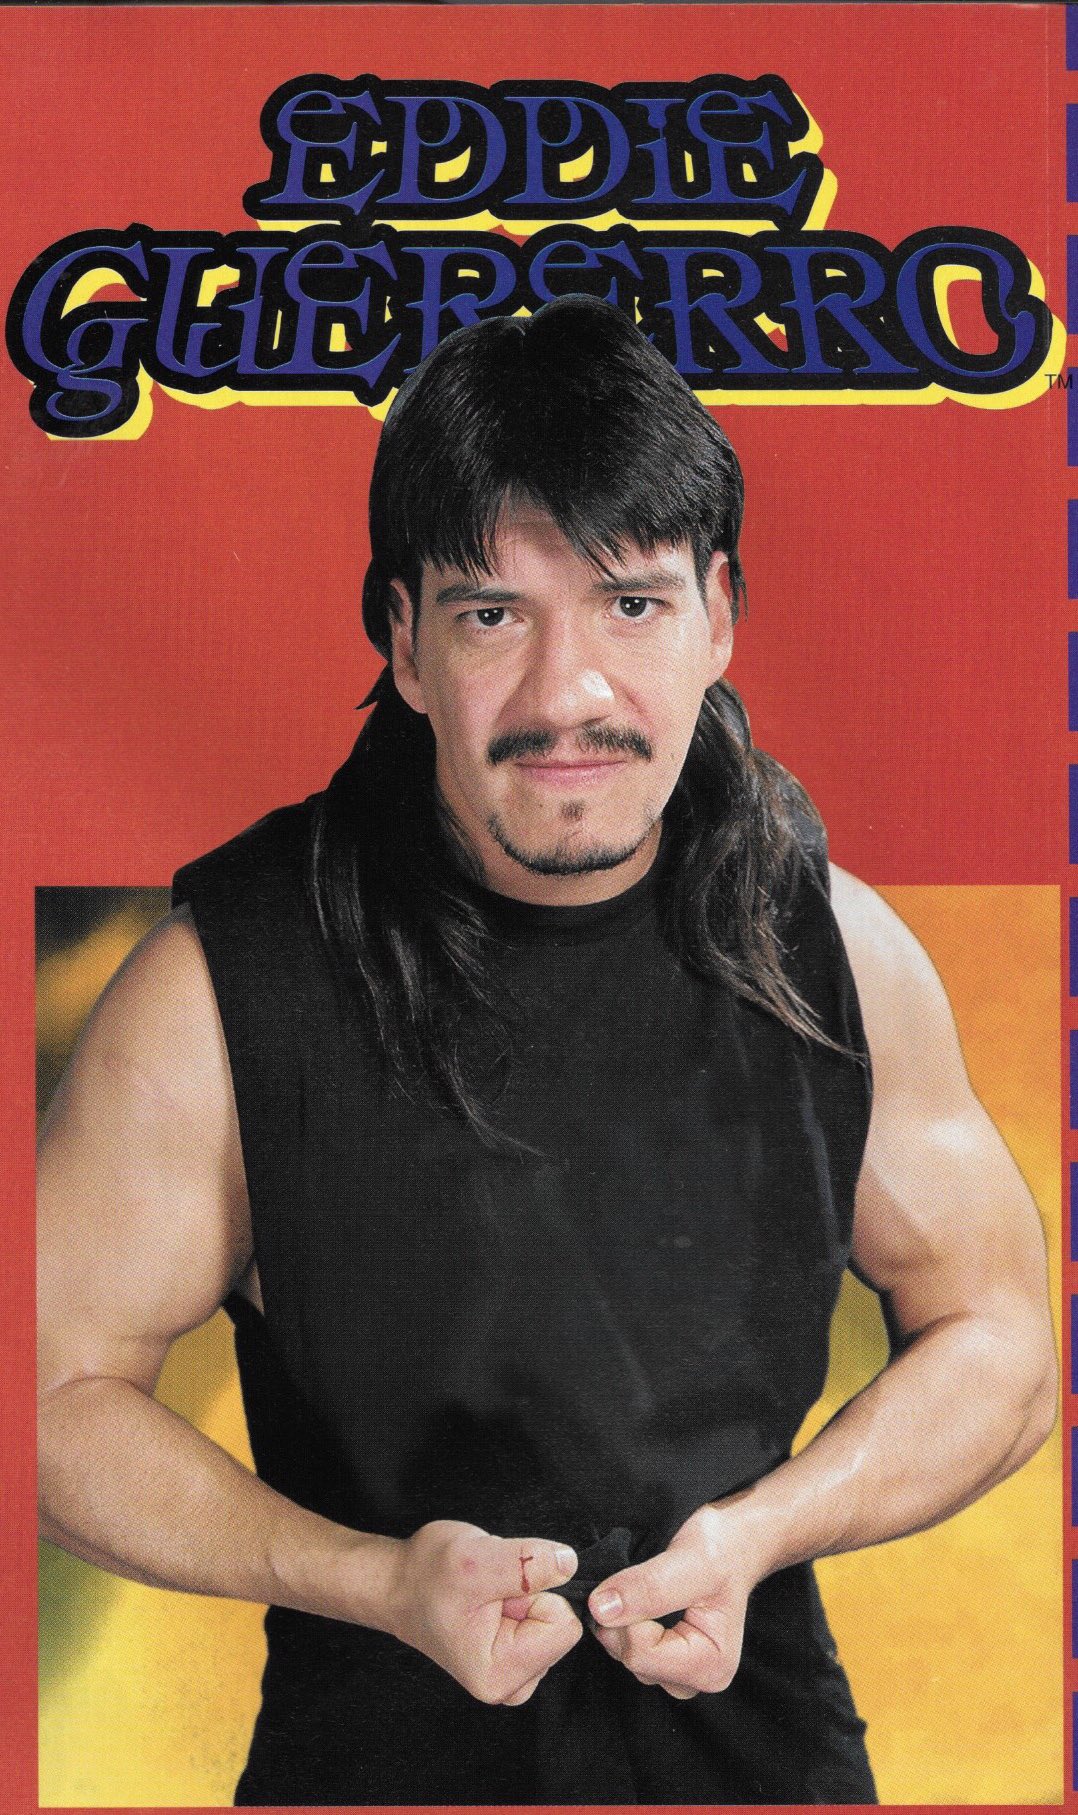 Happy Birthday Eddie Guerrero! 